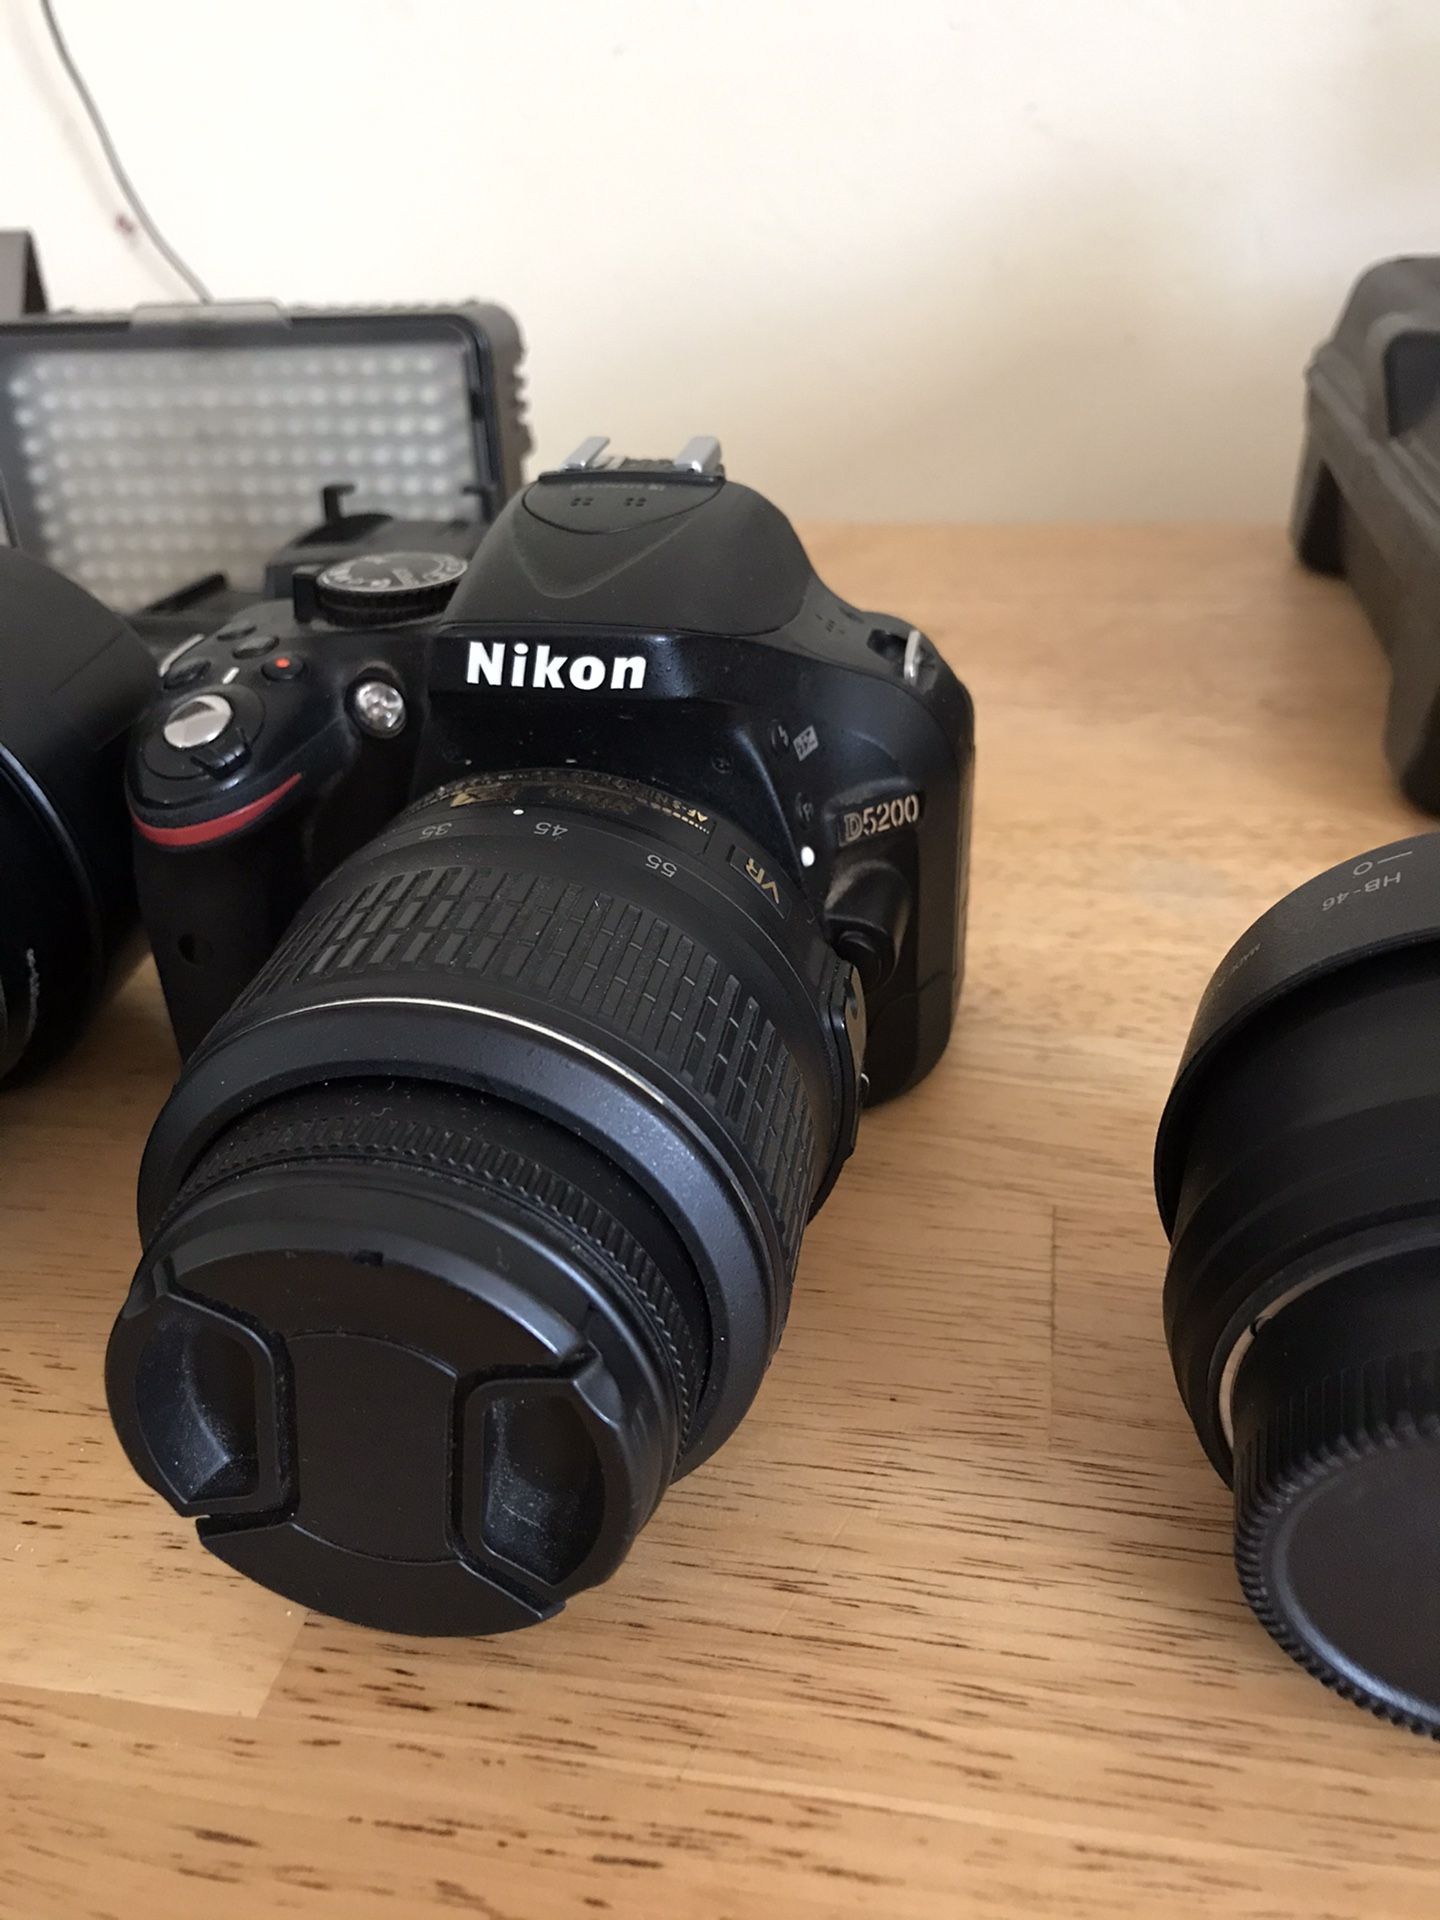 Nikon D5200 and gear